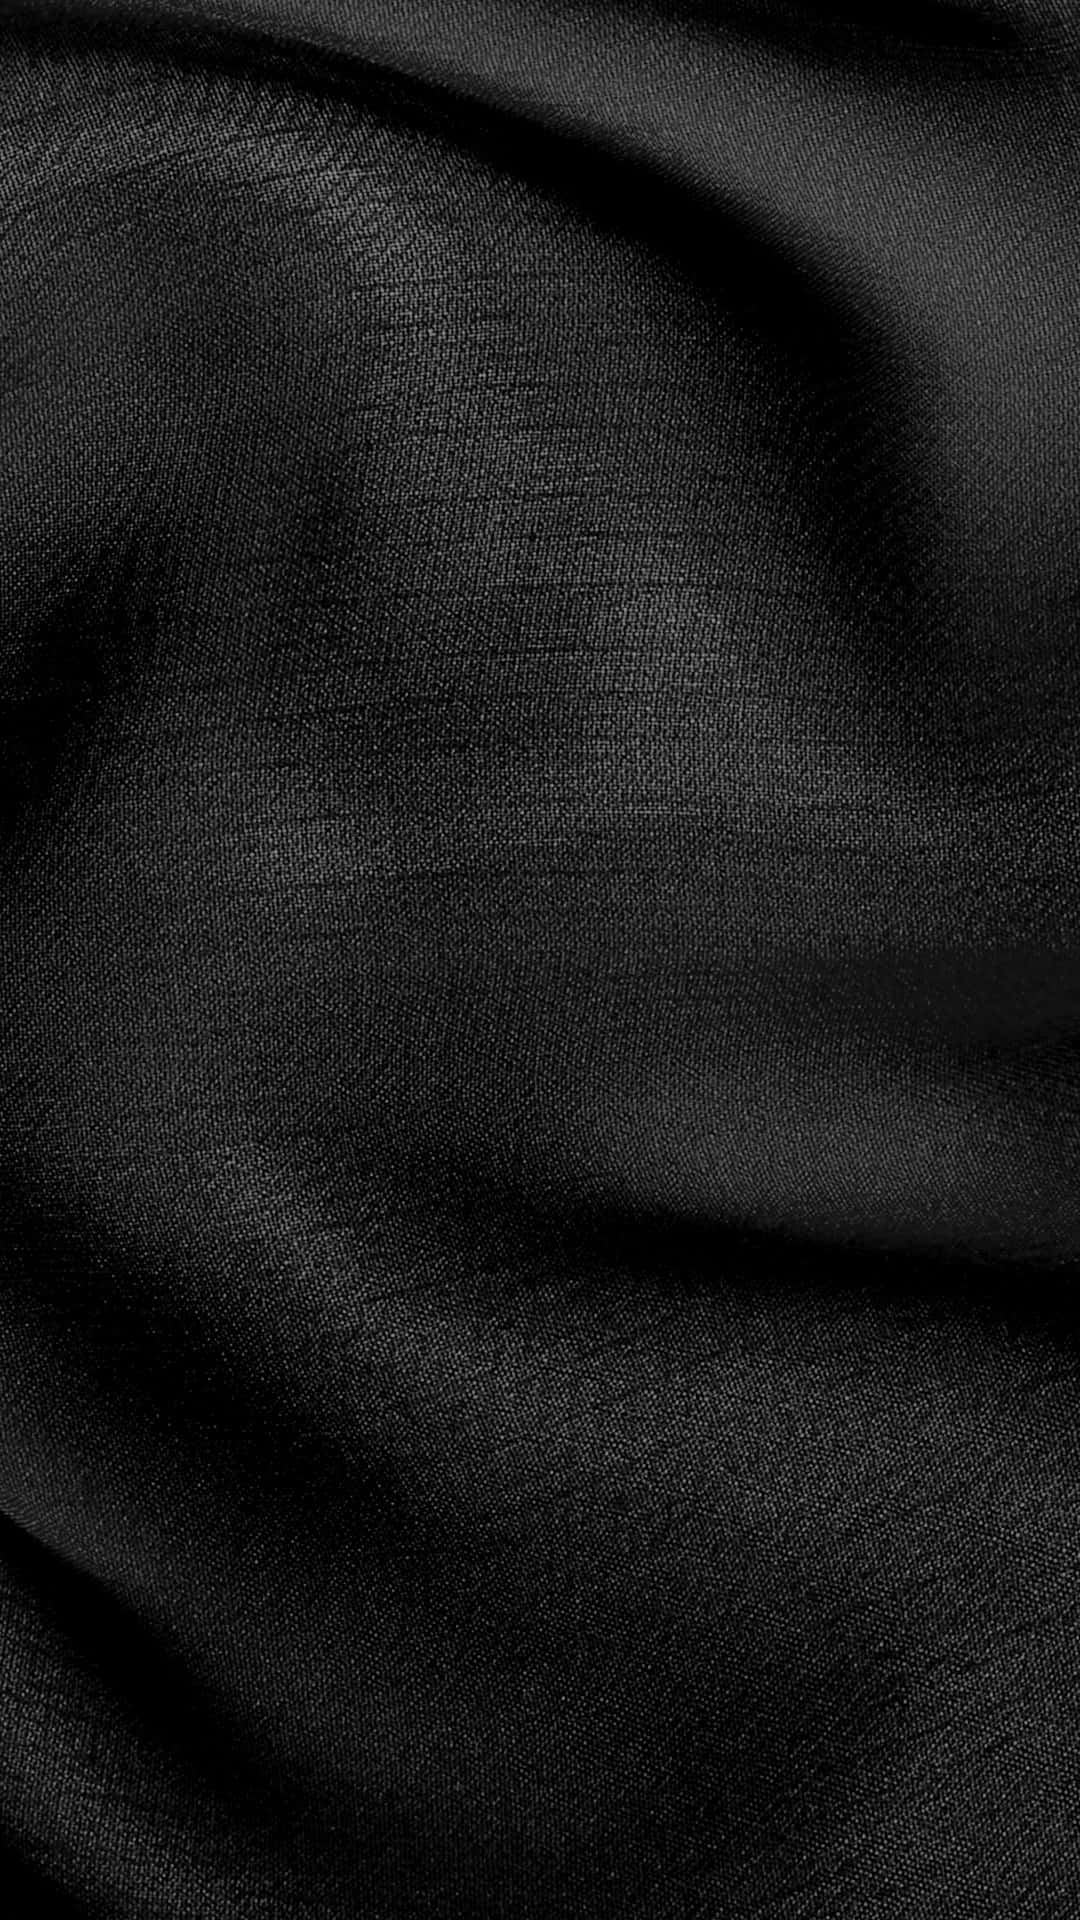 Black Silk Texture Closeup Wallpaper